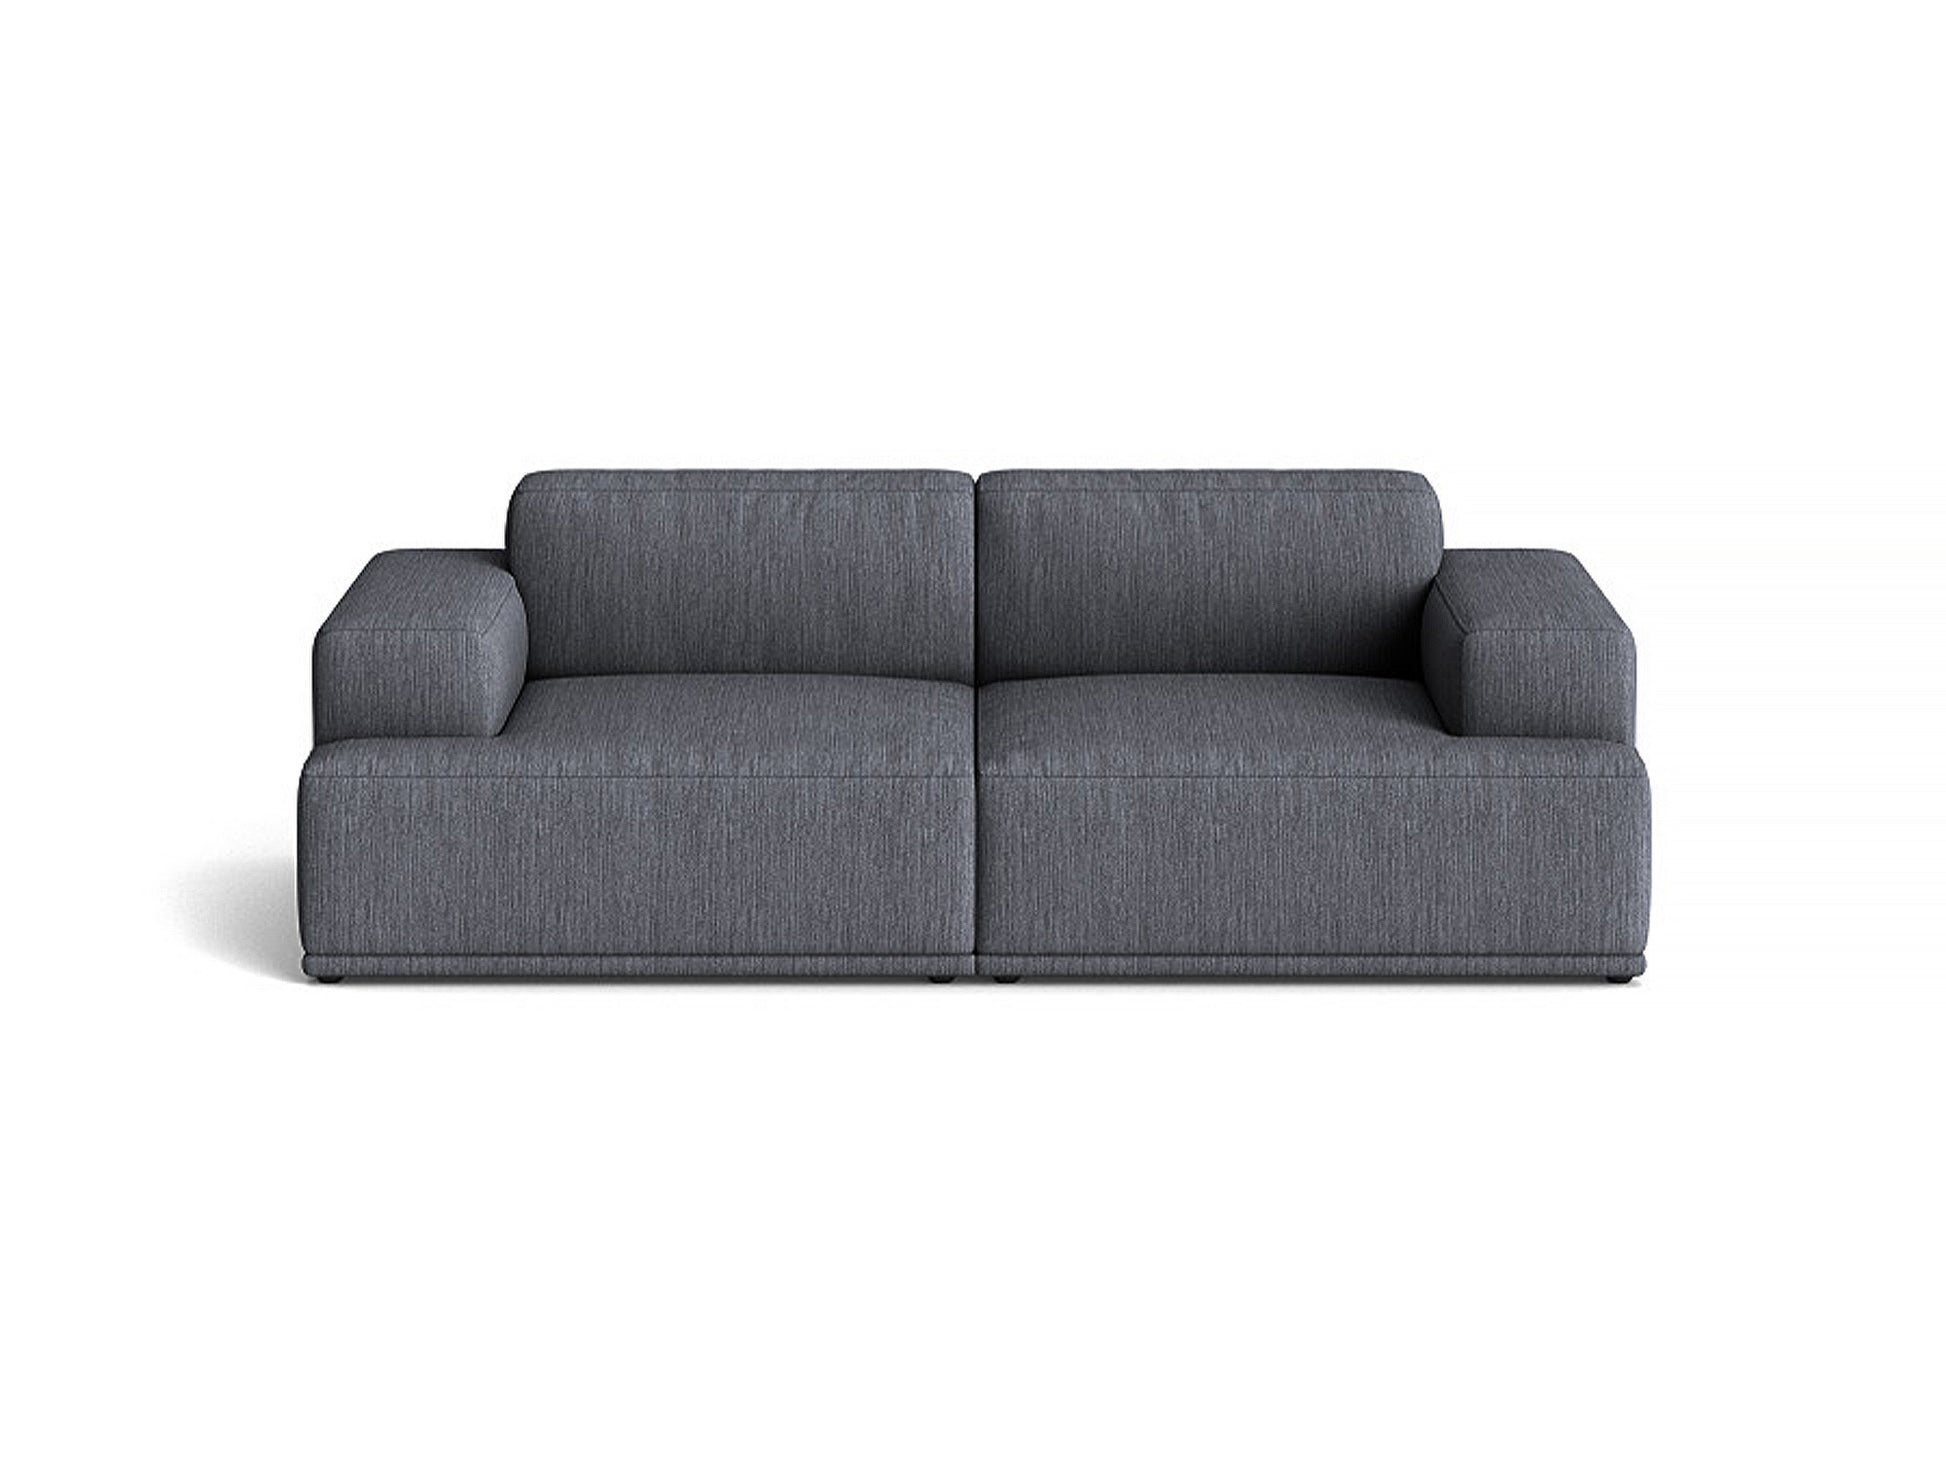 Connect Soft 2-Seater Modular Sofa by Muuto - Configuration 1 / Balder 152